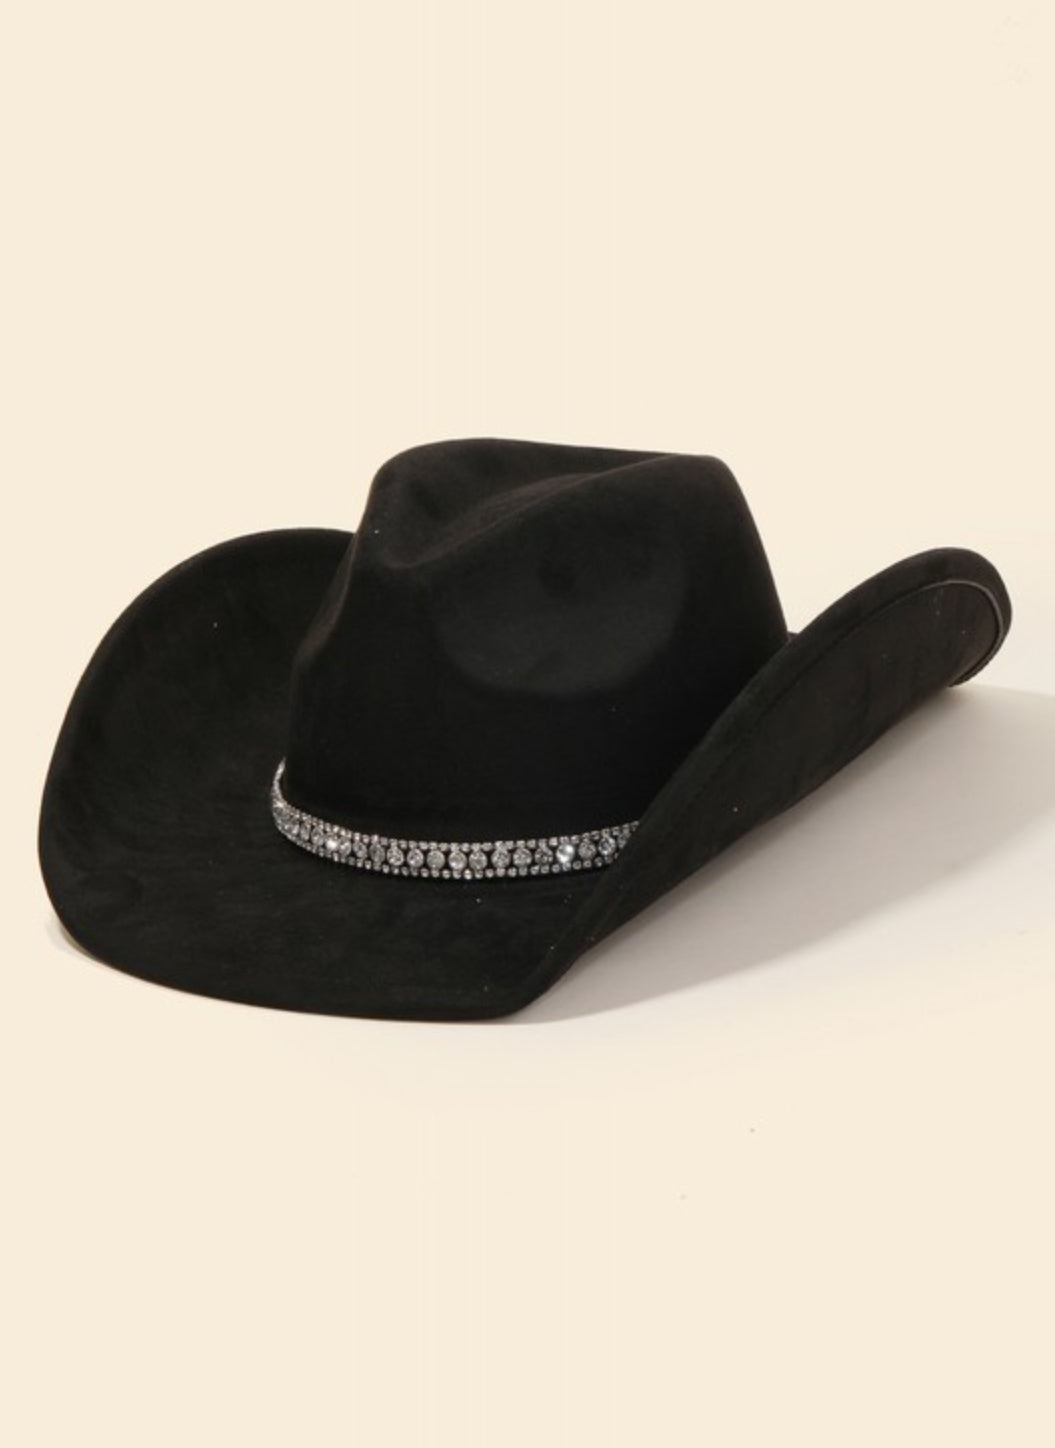 Sandra Sparkly Cowgirl Hat - Black